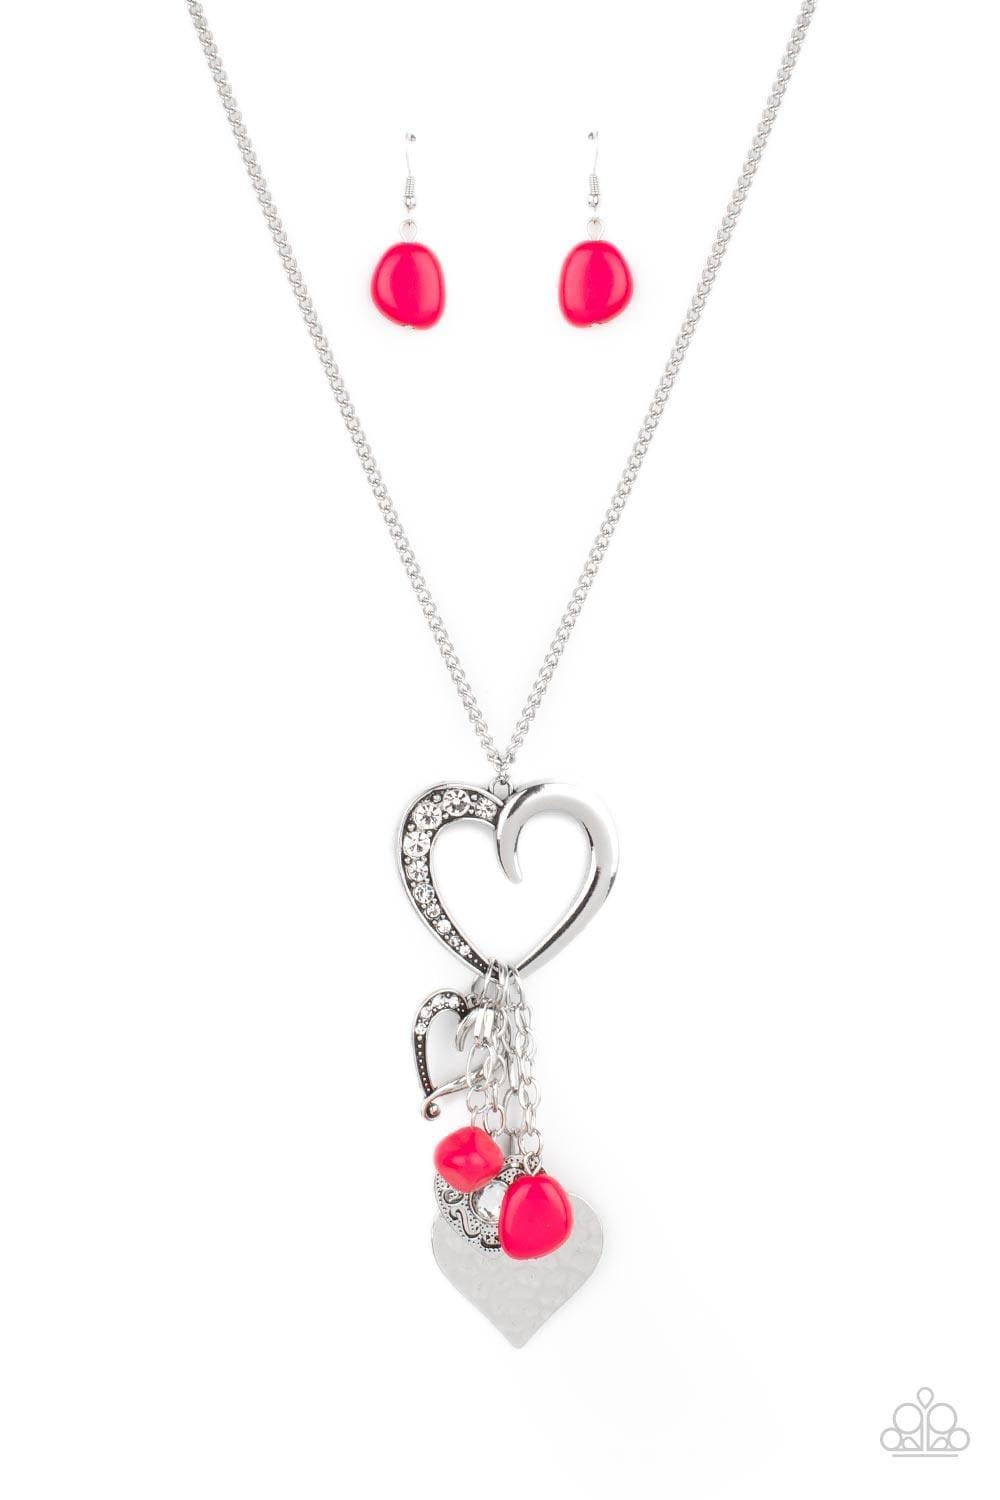 Paparazzi Accessories - Flirty Fashionista - Pink Necklace - Bling by JessieK